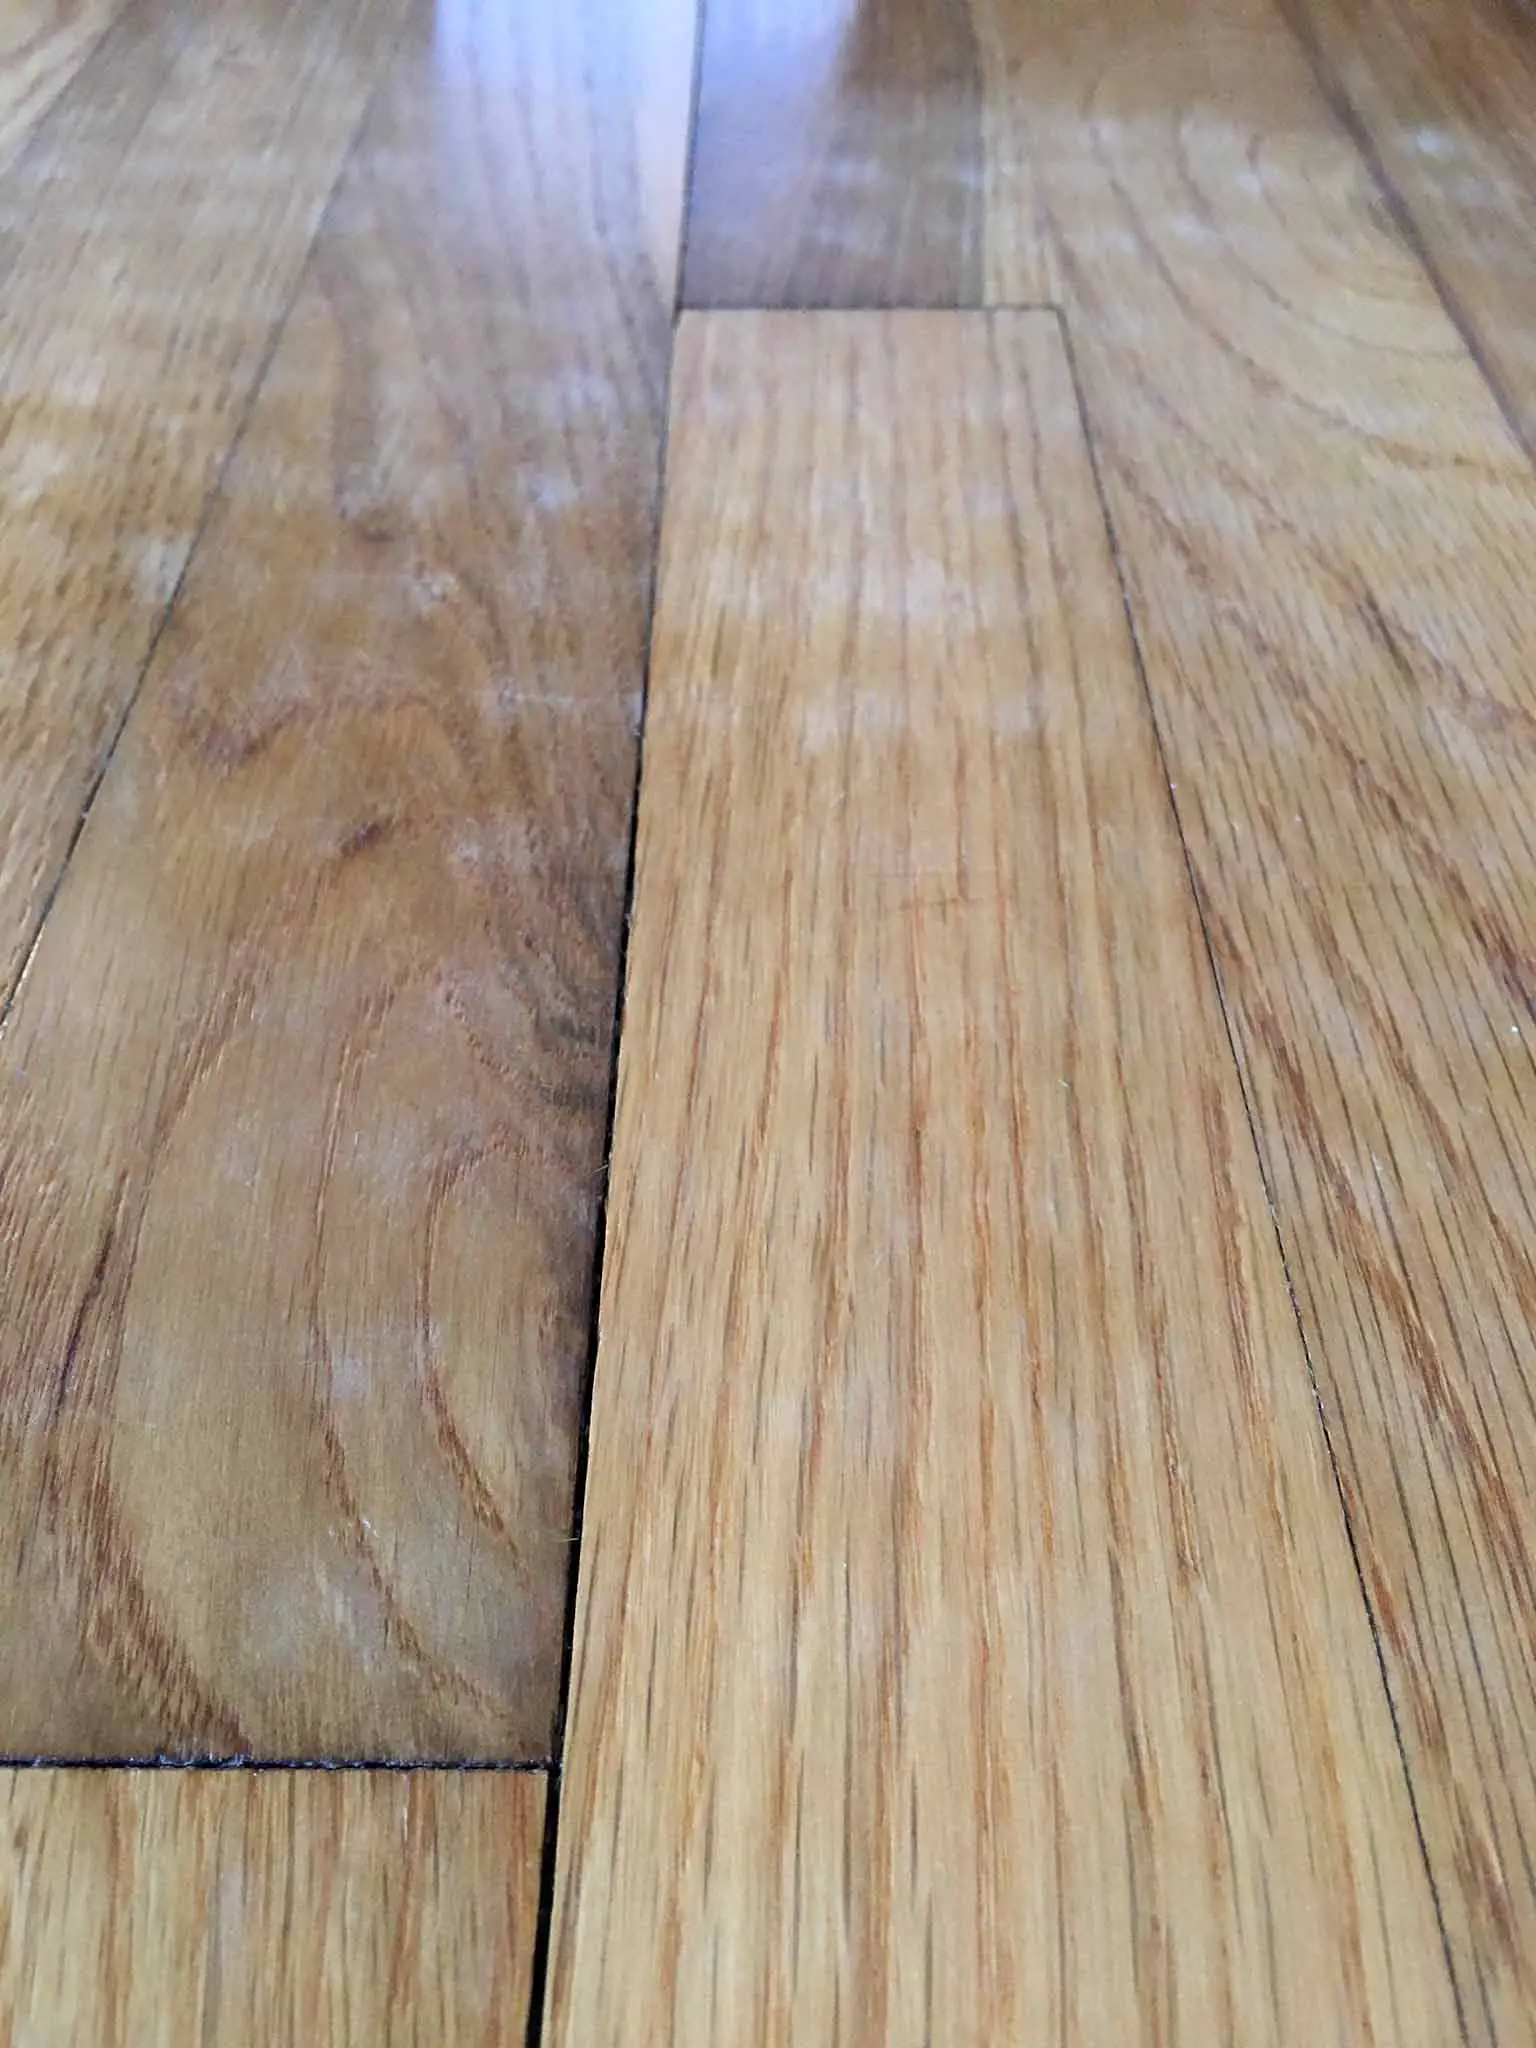 How I Wrecked My Hardwood Floors And, Padded Area Rug For Hardwood Floor